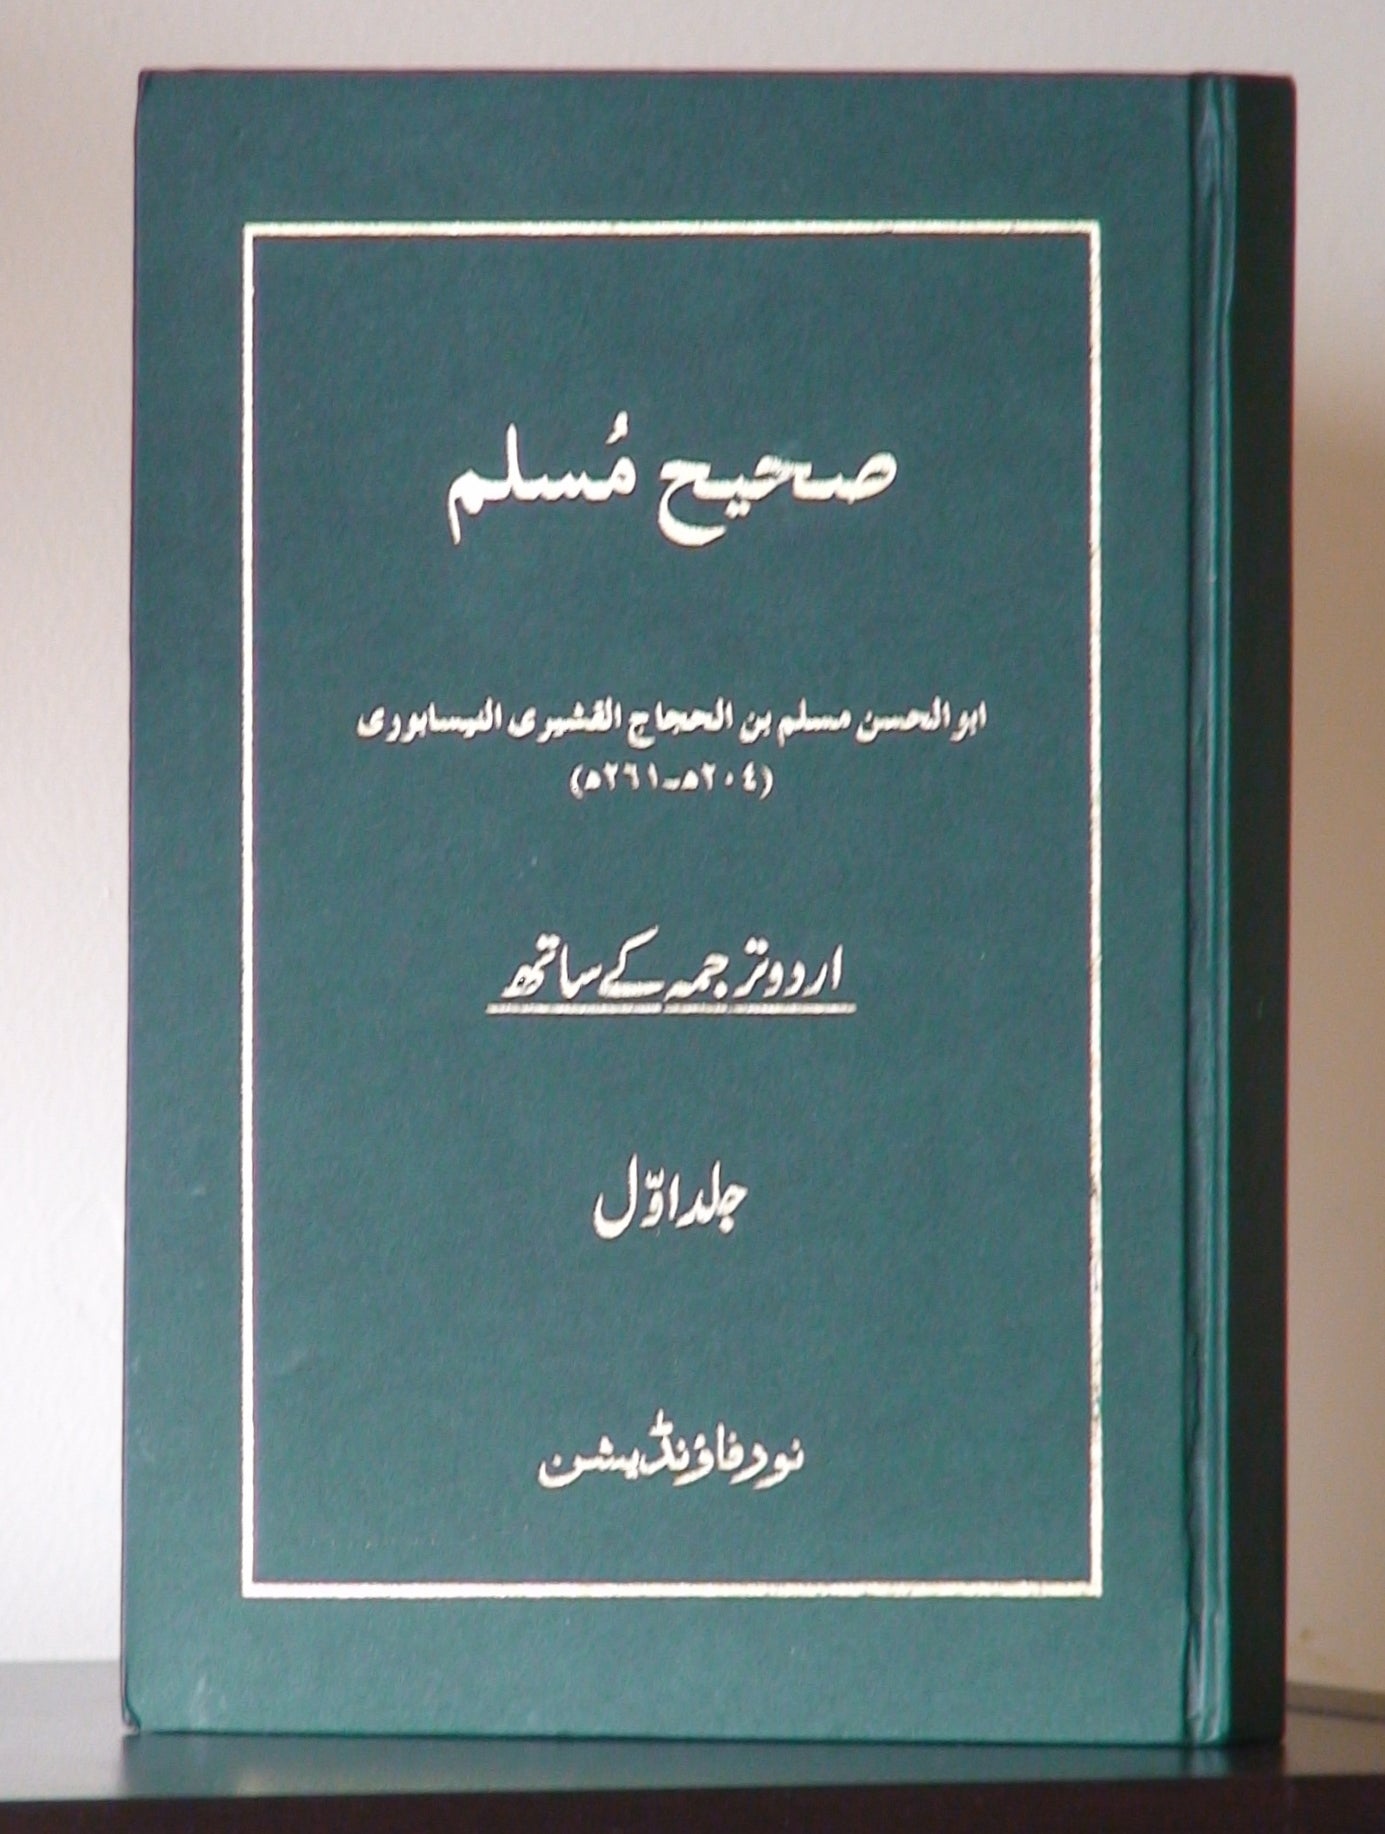 Sahih Muslim, Urdu translation, 15 volumes